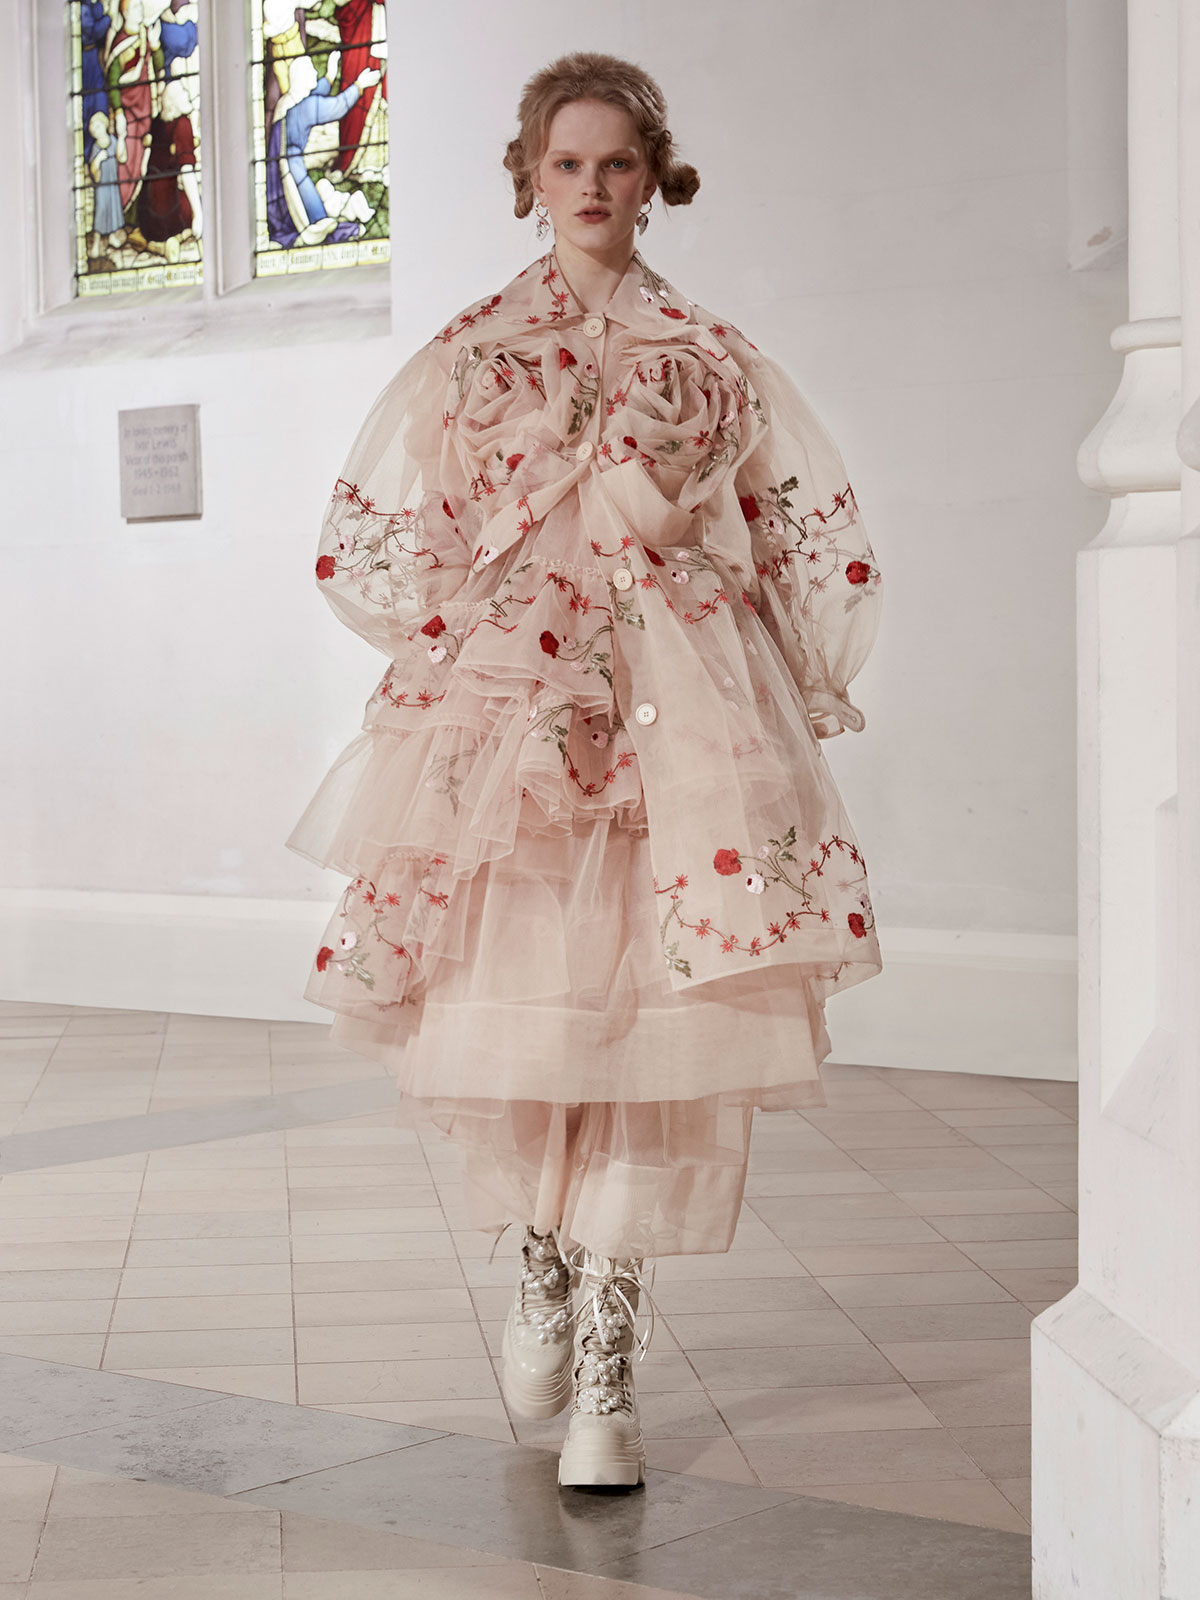 Simone Rocha Fall/Winter 2021 The Fashionography